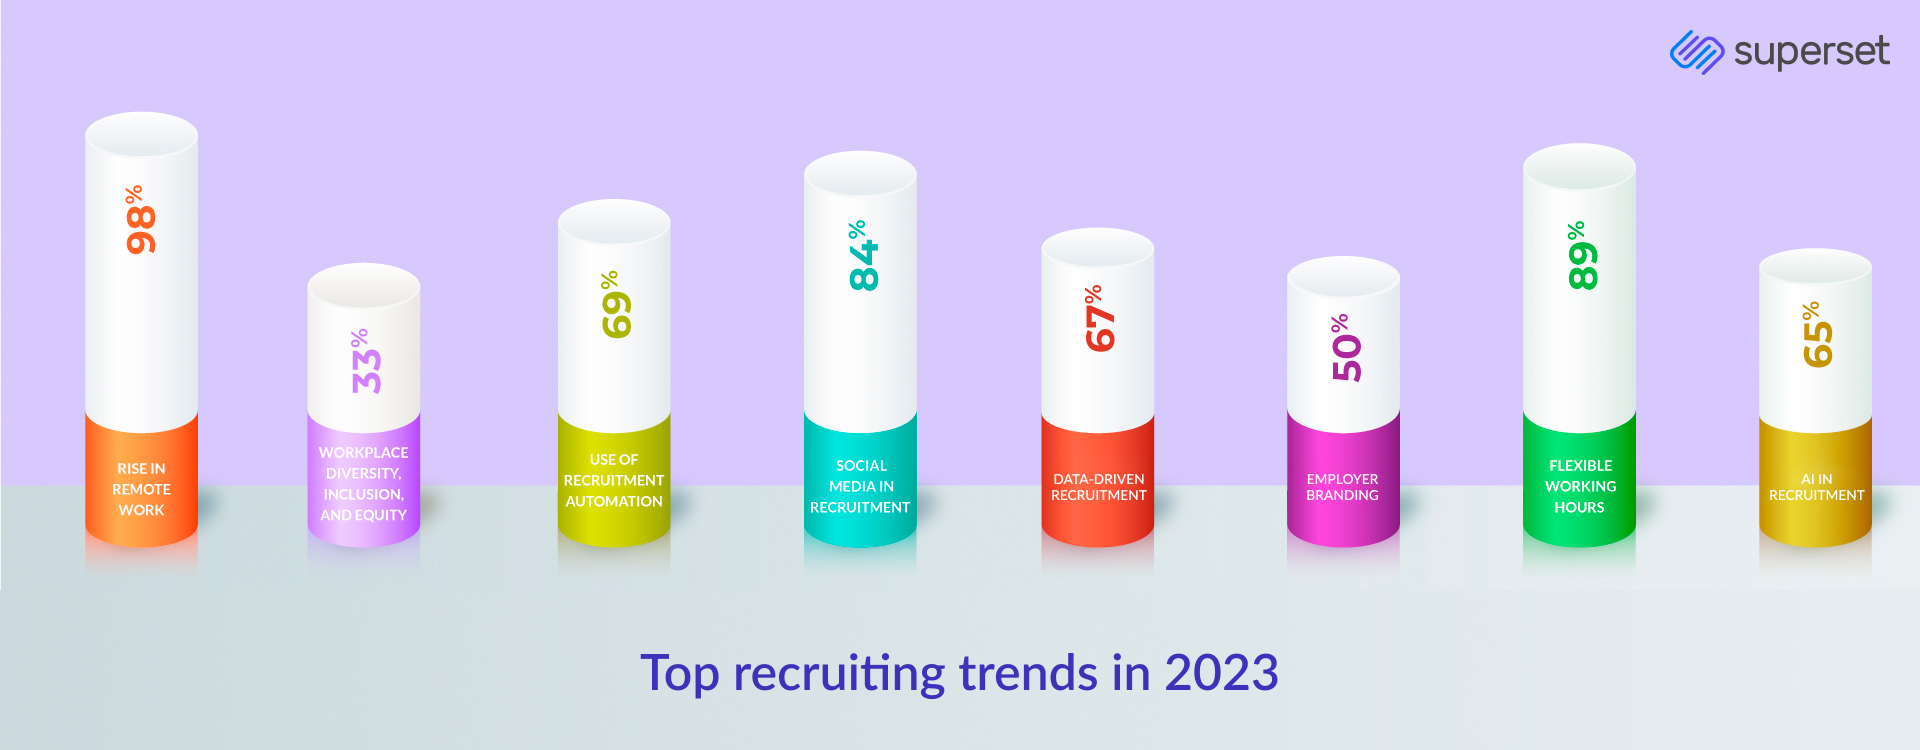 Top campus recruitment trends in 2023